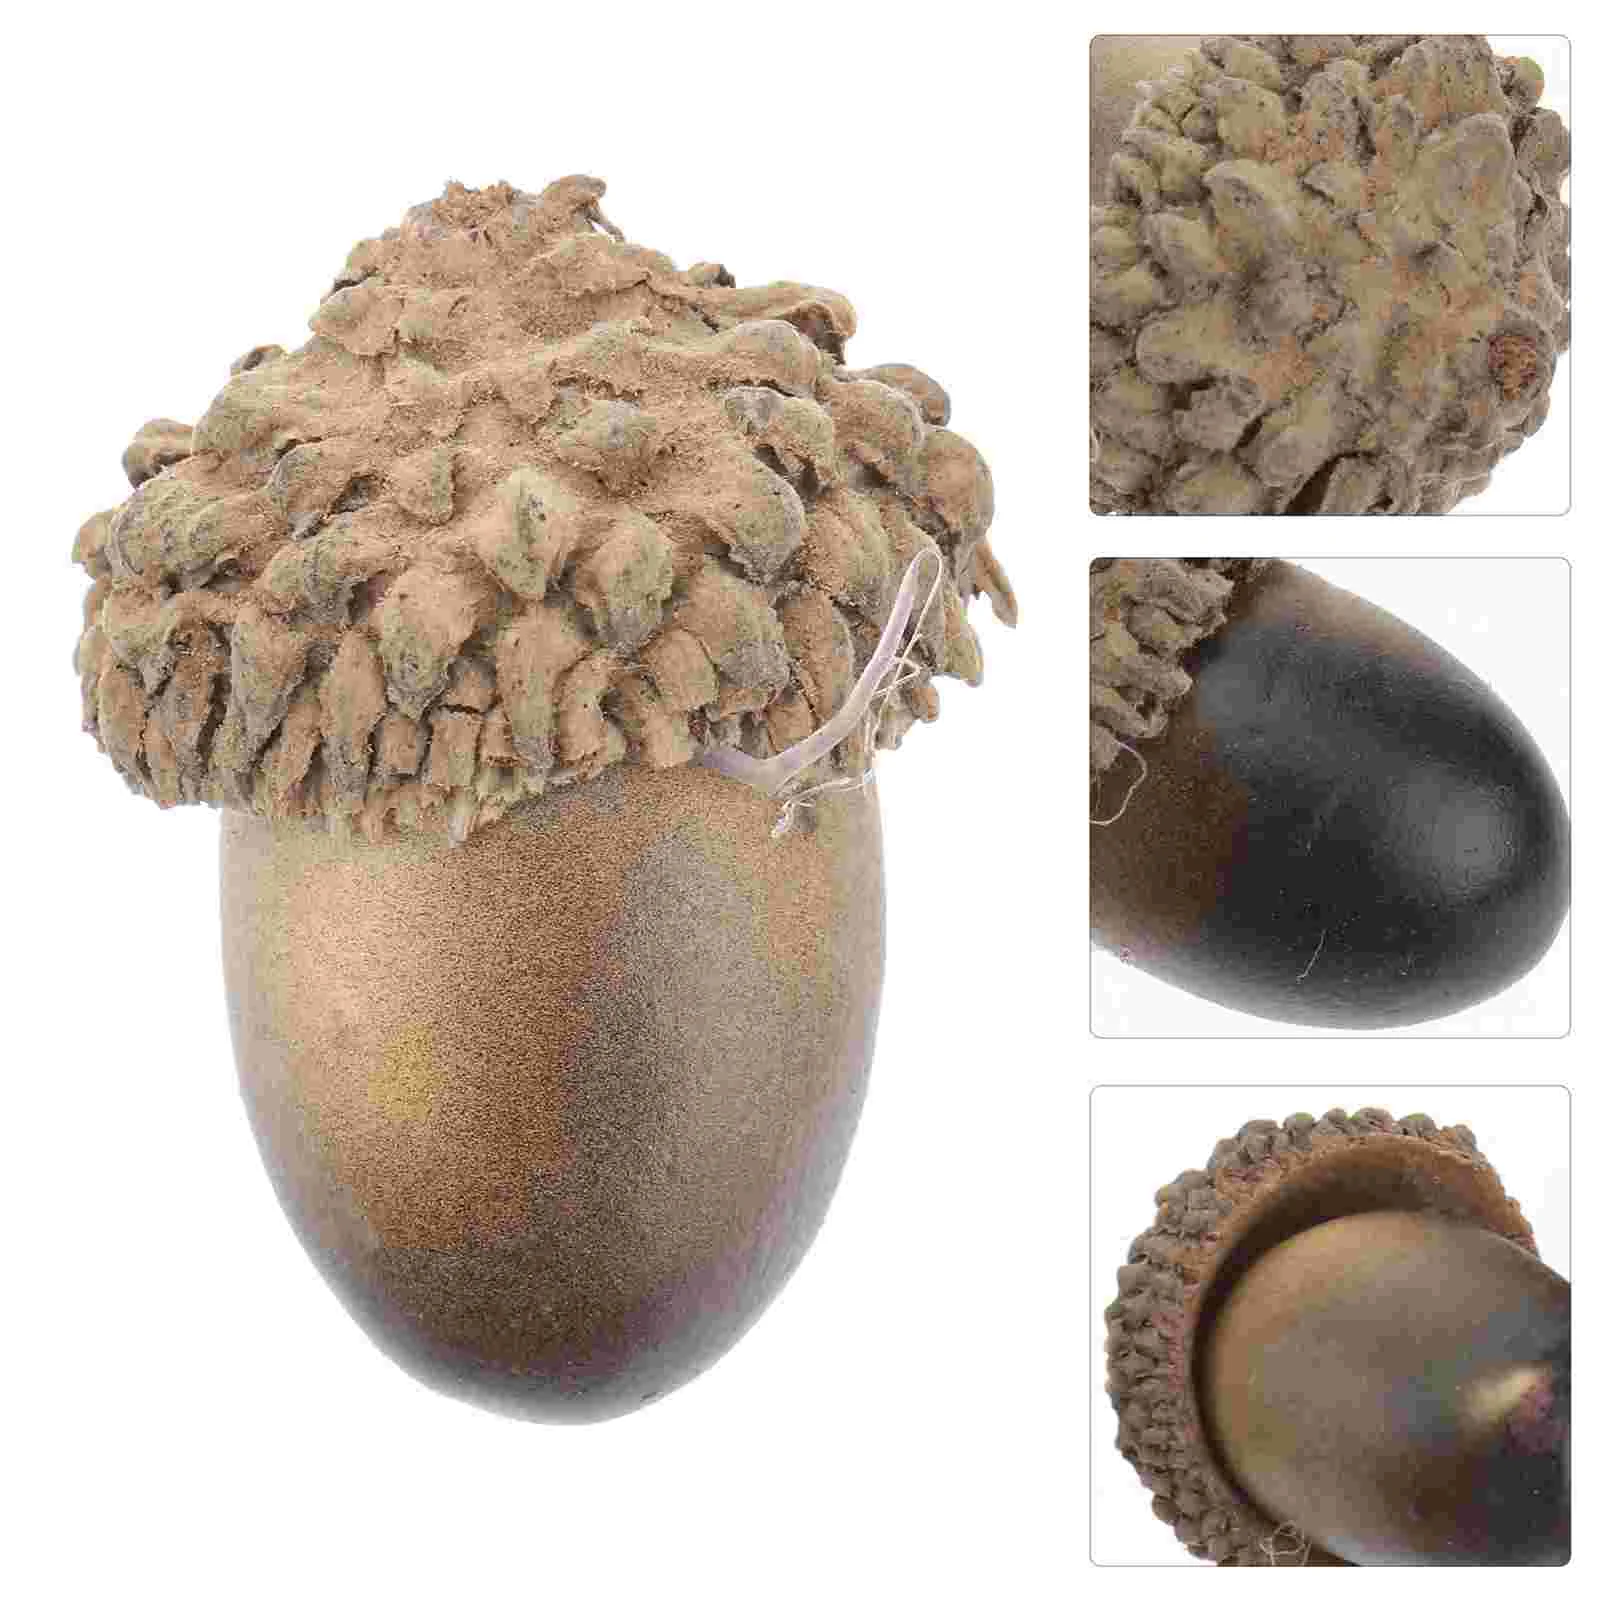 

Acorn Artificial Acorns Small Christmas Thanksgiving Nut Lifelike Tree Cones Pine Craft Propmini Fake Simulation Decorative